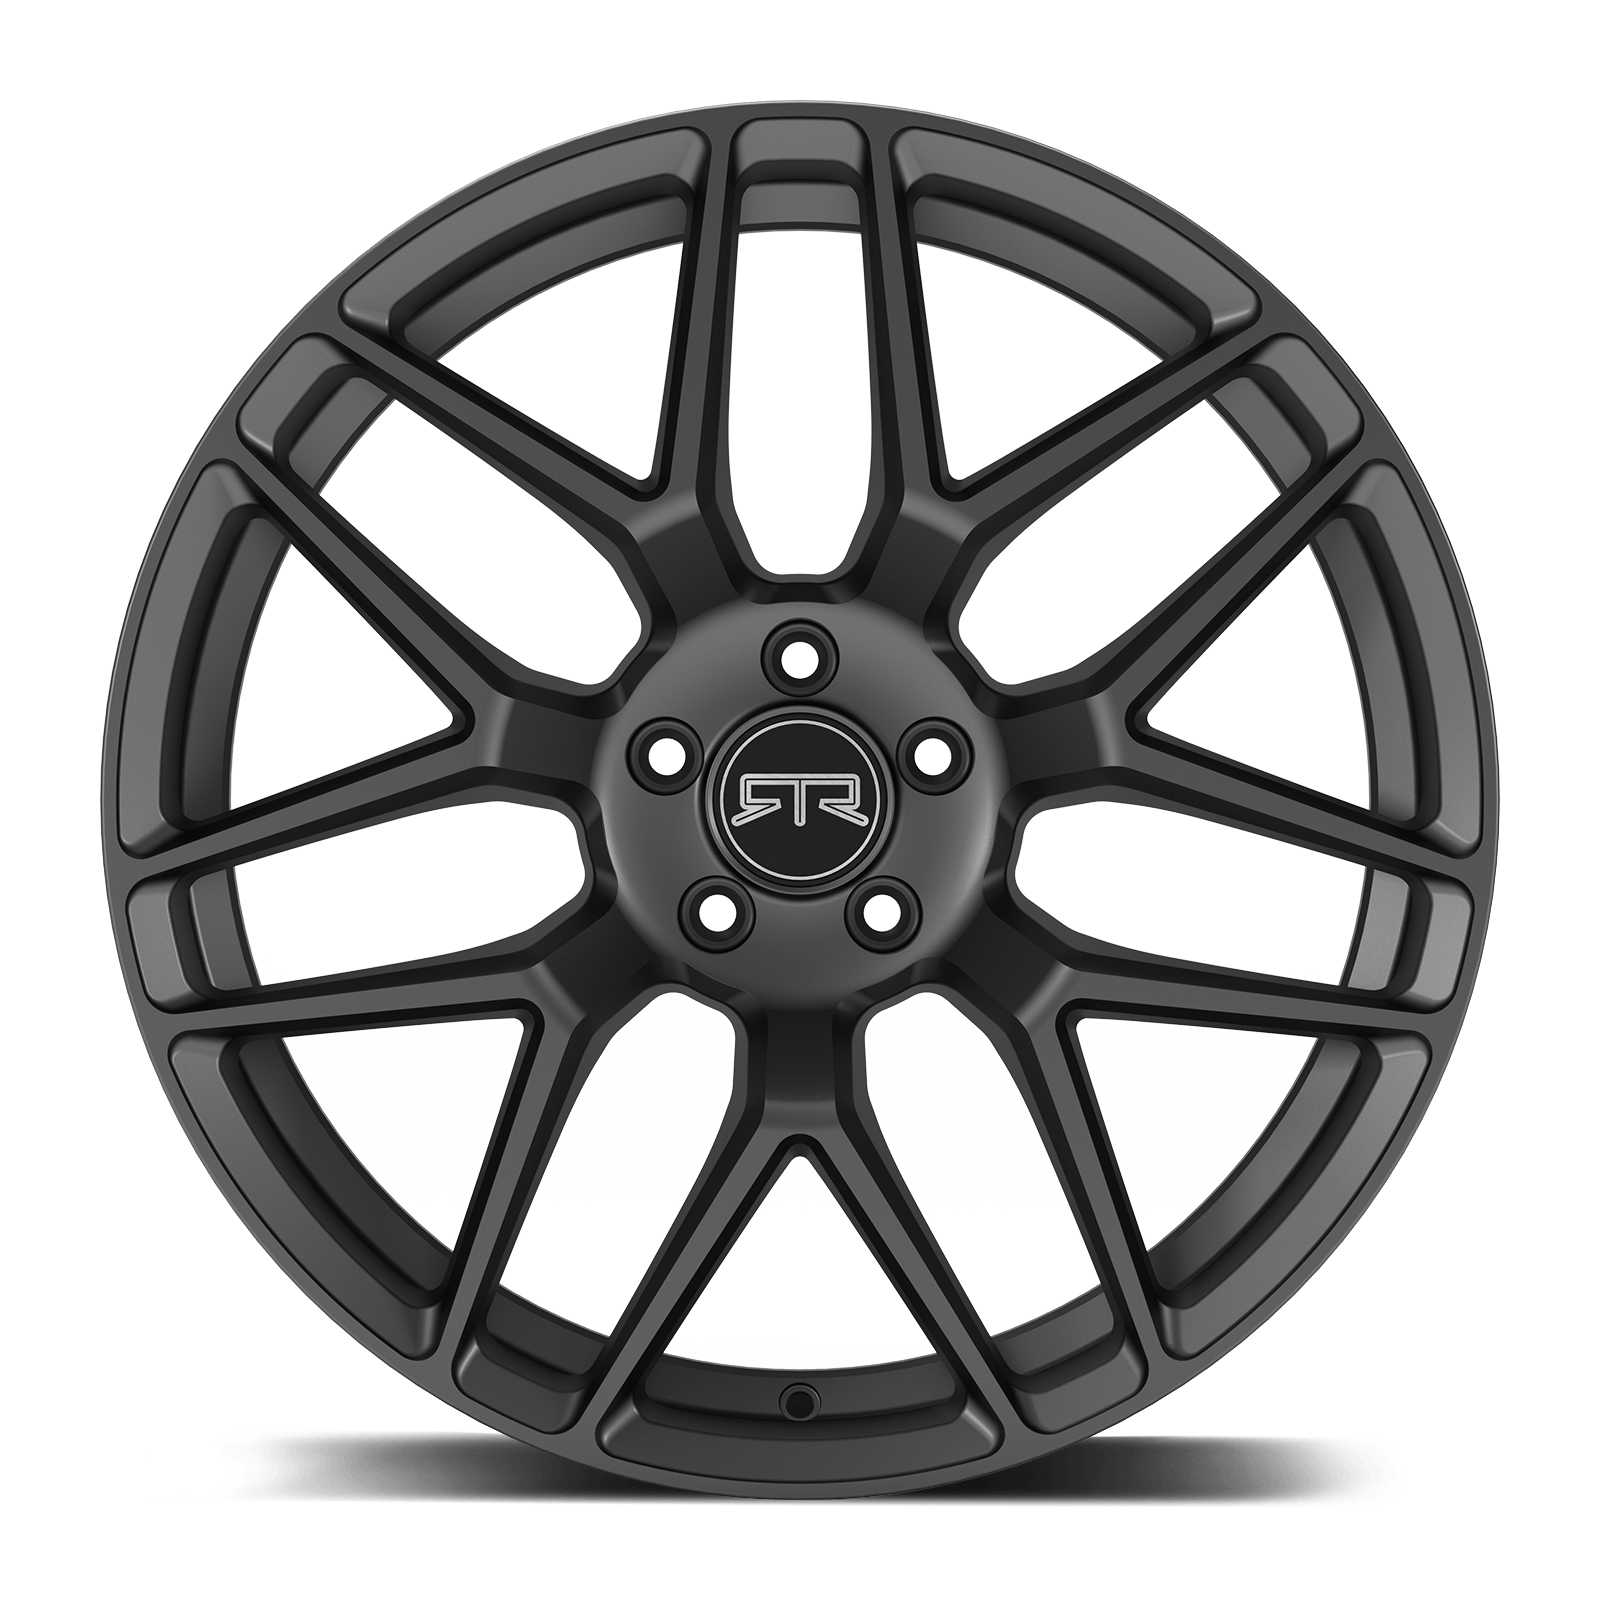 The High Gloss Signature Wheel & Tire Detailing Kit